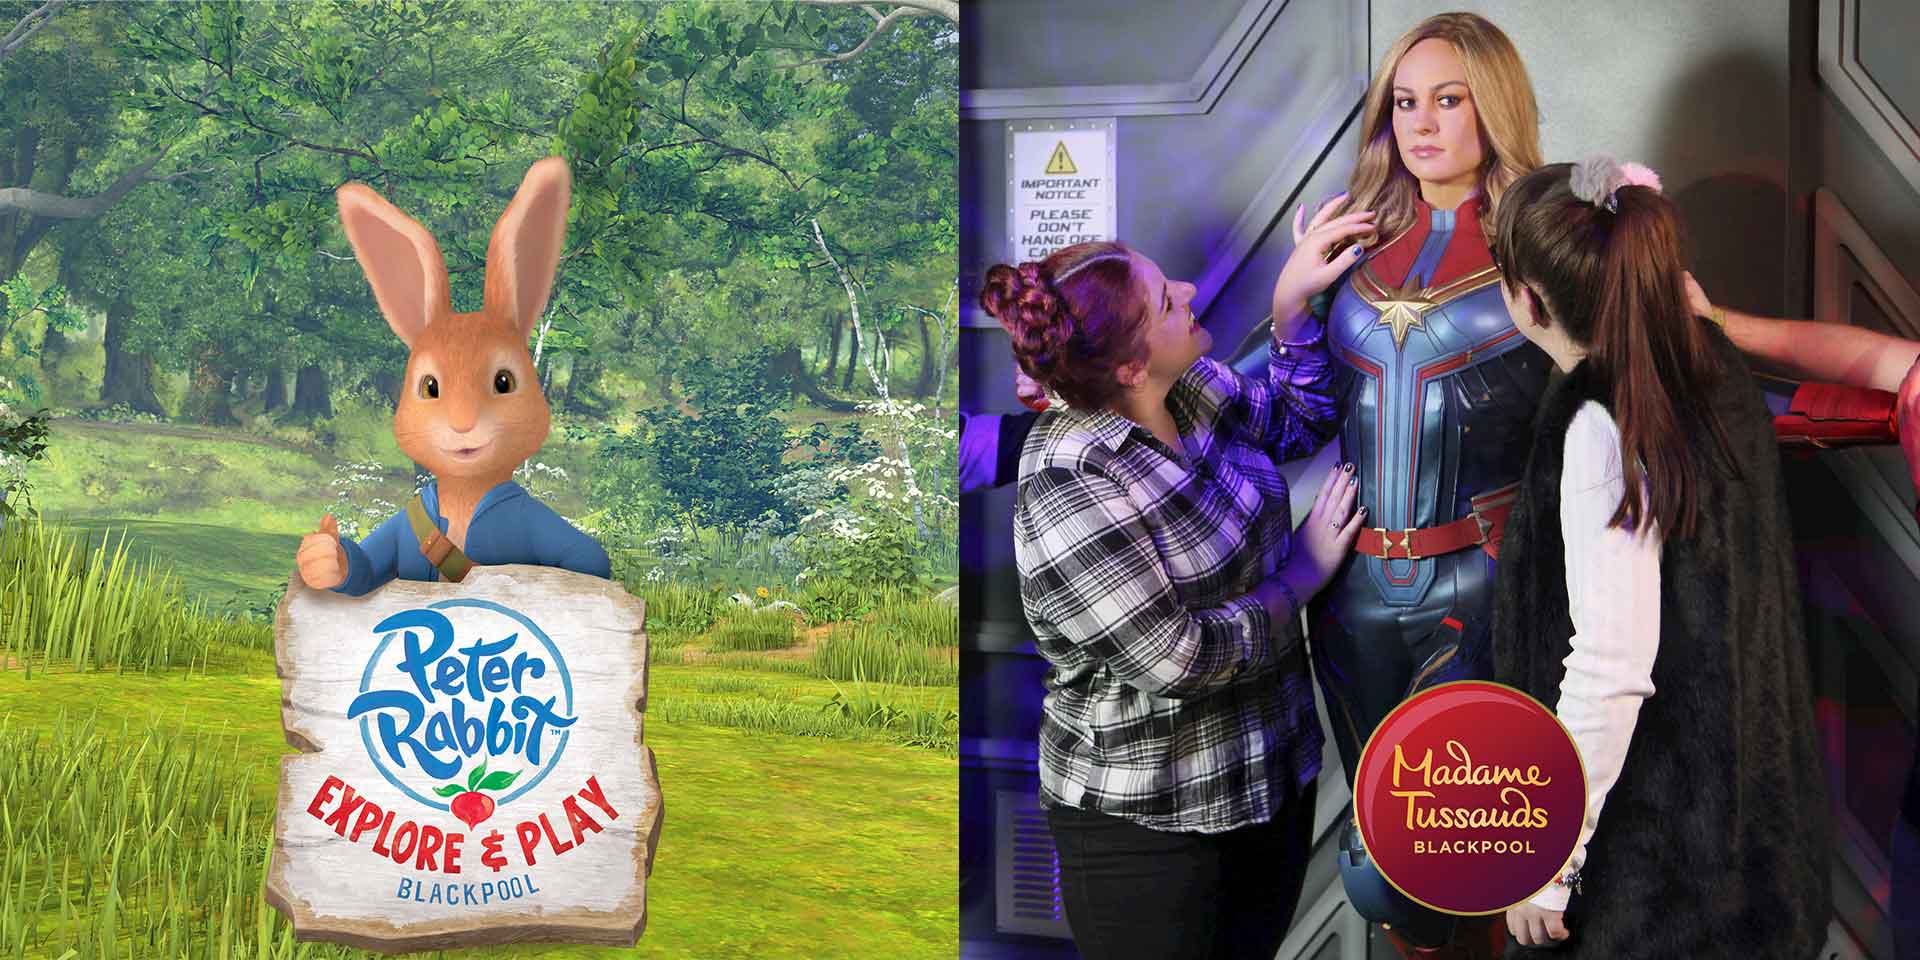 Peter Rabbit Explore and Play plus Madame Tussauds Blackpool